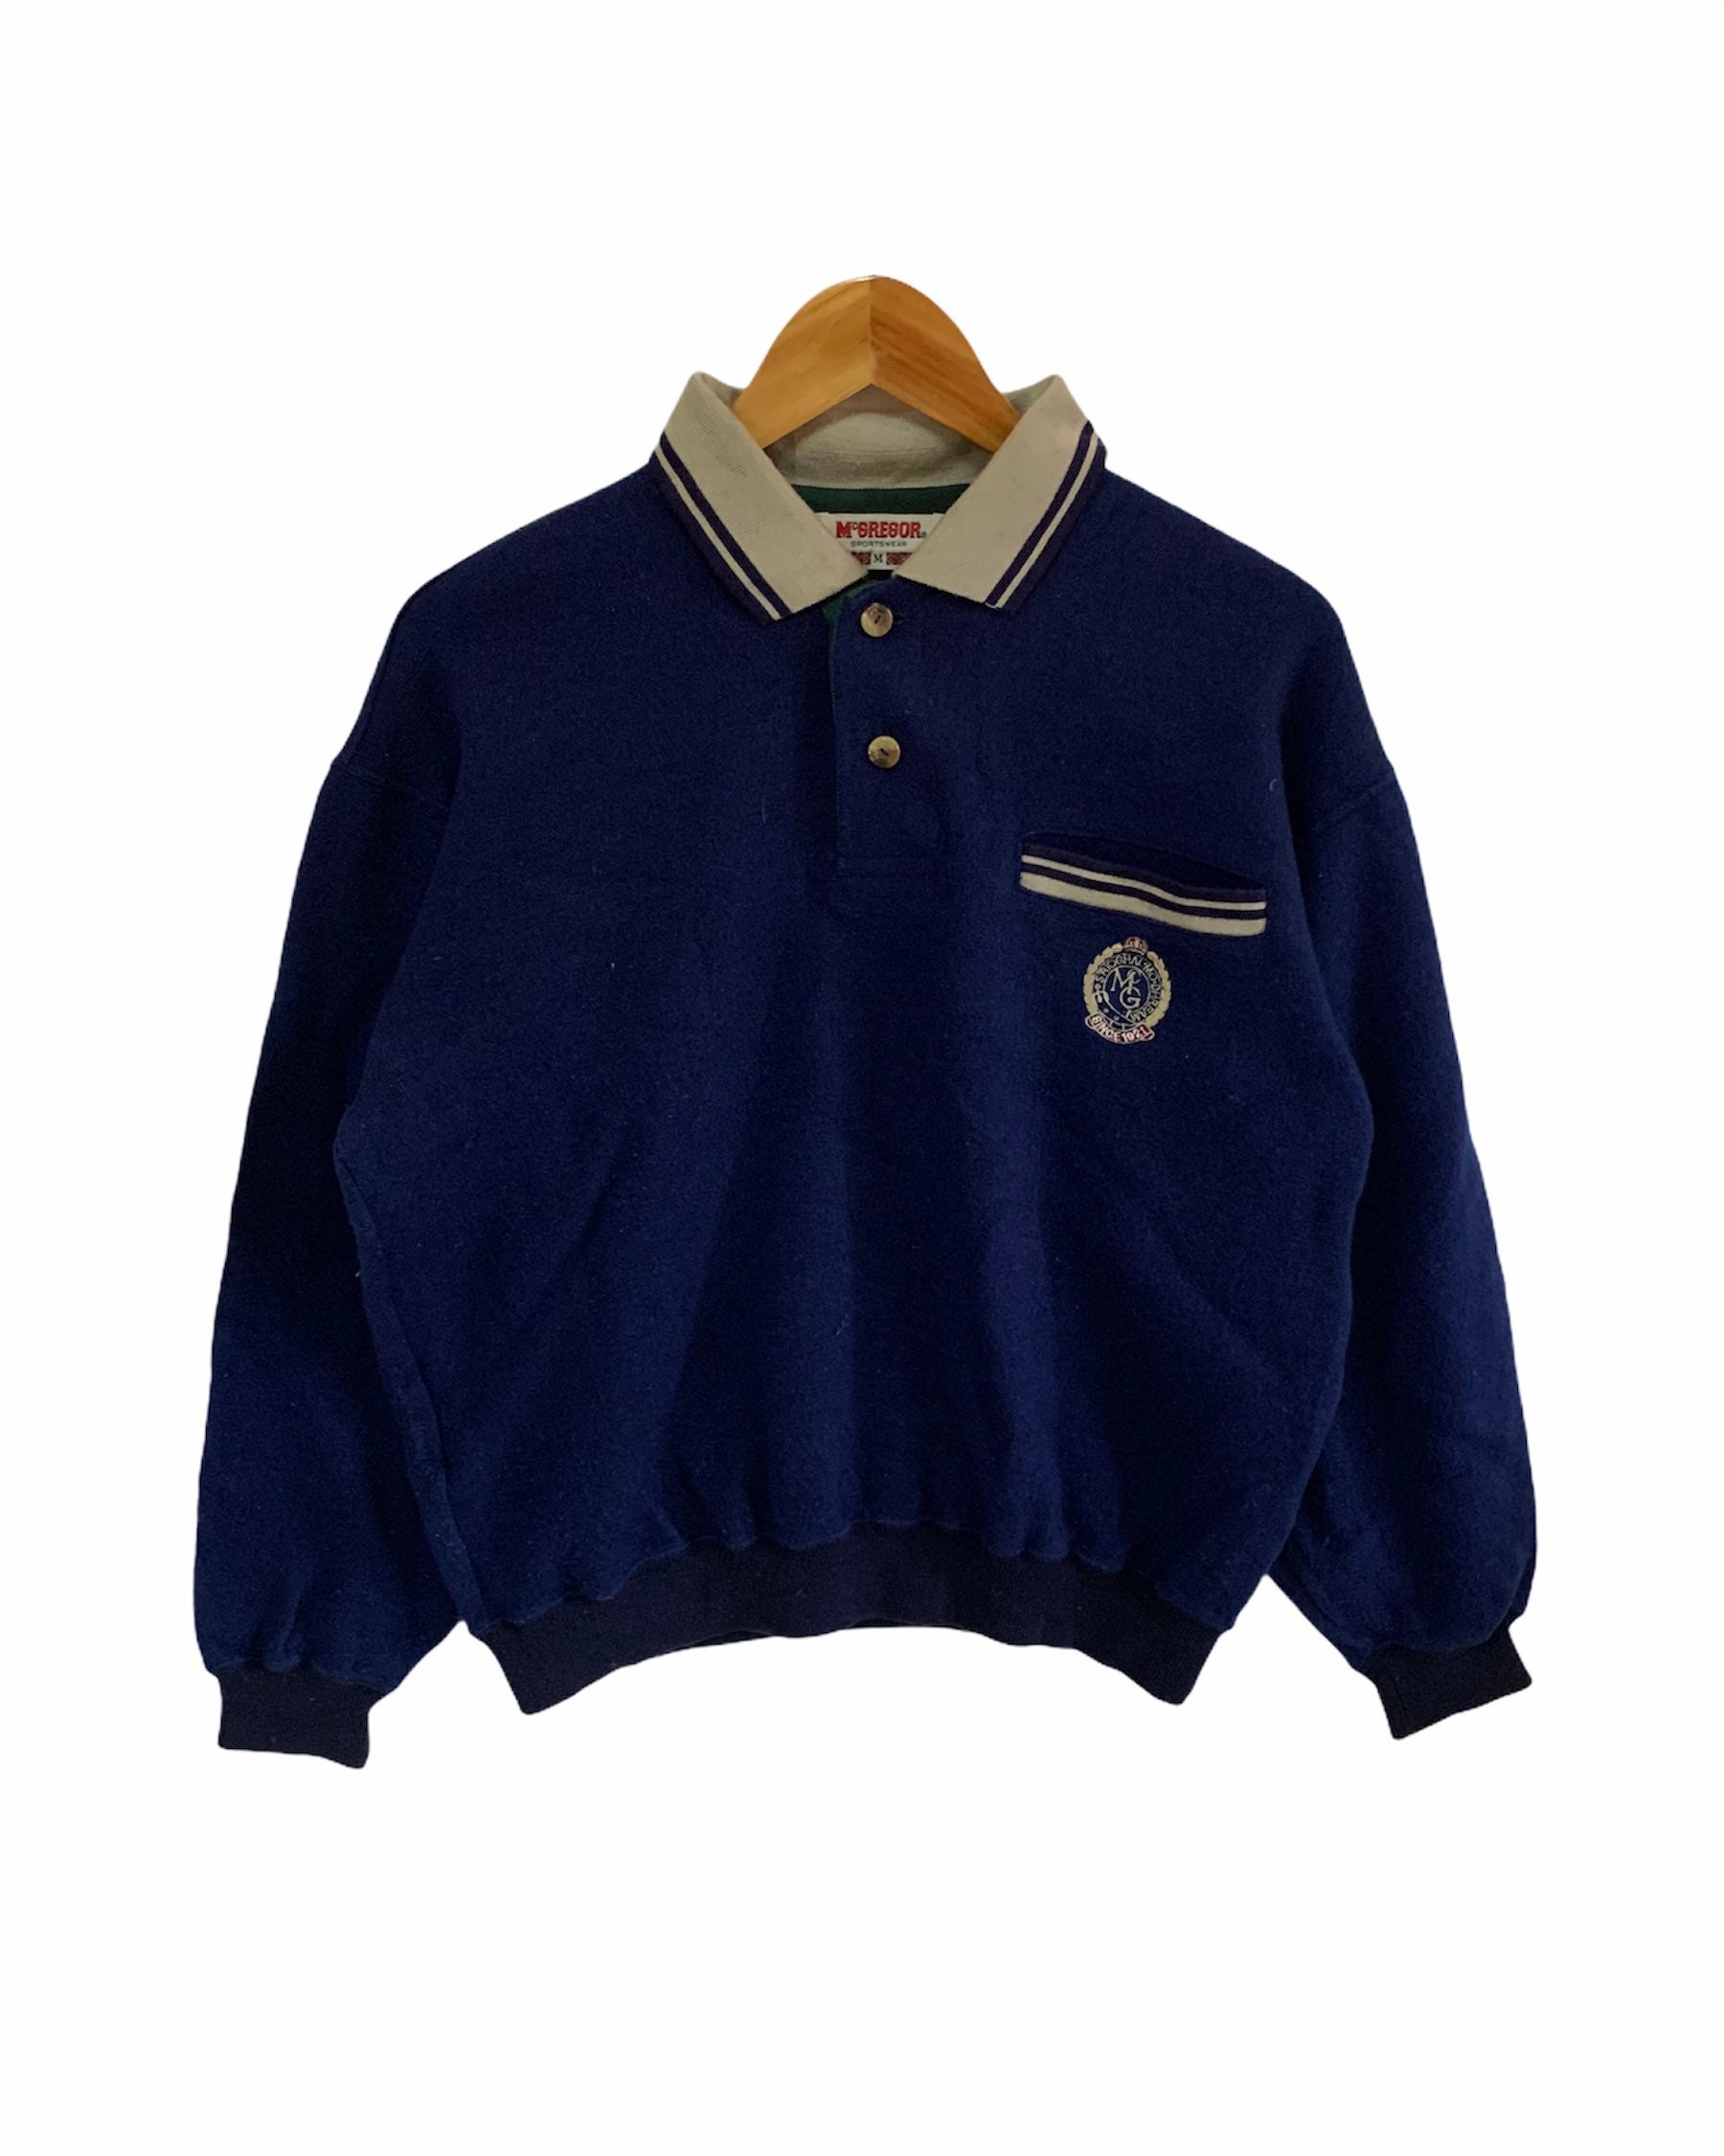 Vintage 90s mc gregor sportswear sweatshirt small logo collar | Etsy